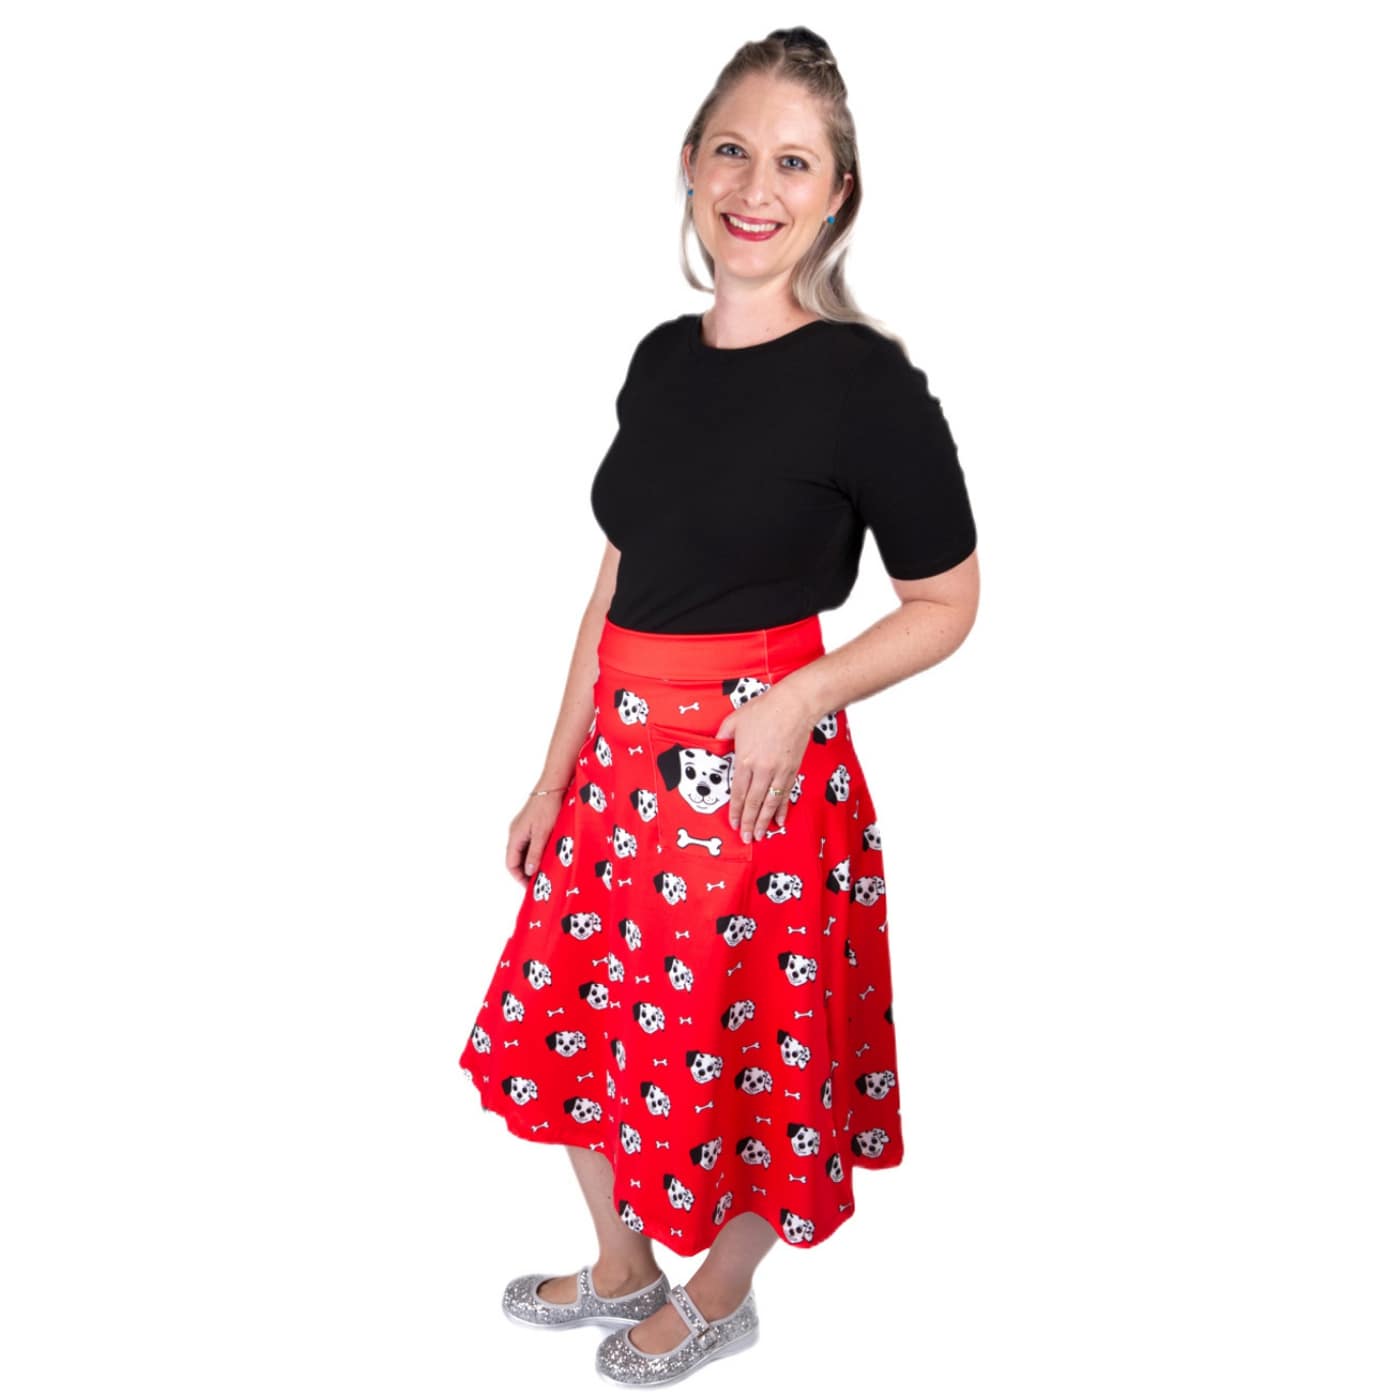 Puppy Love Original Skirt by RainbowsAndFairies.com.au (Dalmation - Dog Bone - Fire Engine Red - Kitsch - Aline Skirt With Pockets - Vintage Inspired) - SKU: CL_OSKRT_PUPPY_ORG - Pic-02